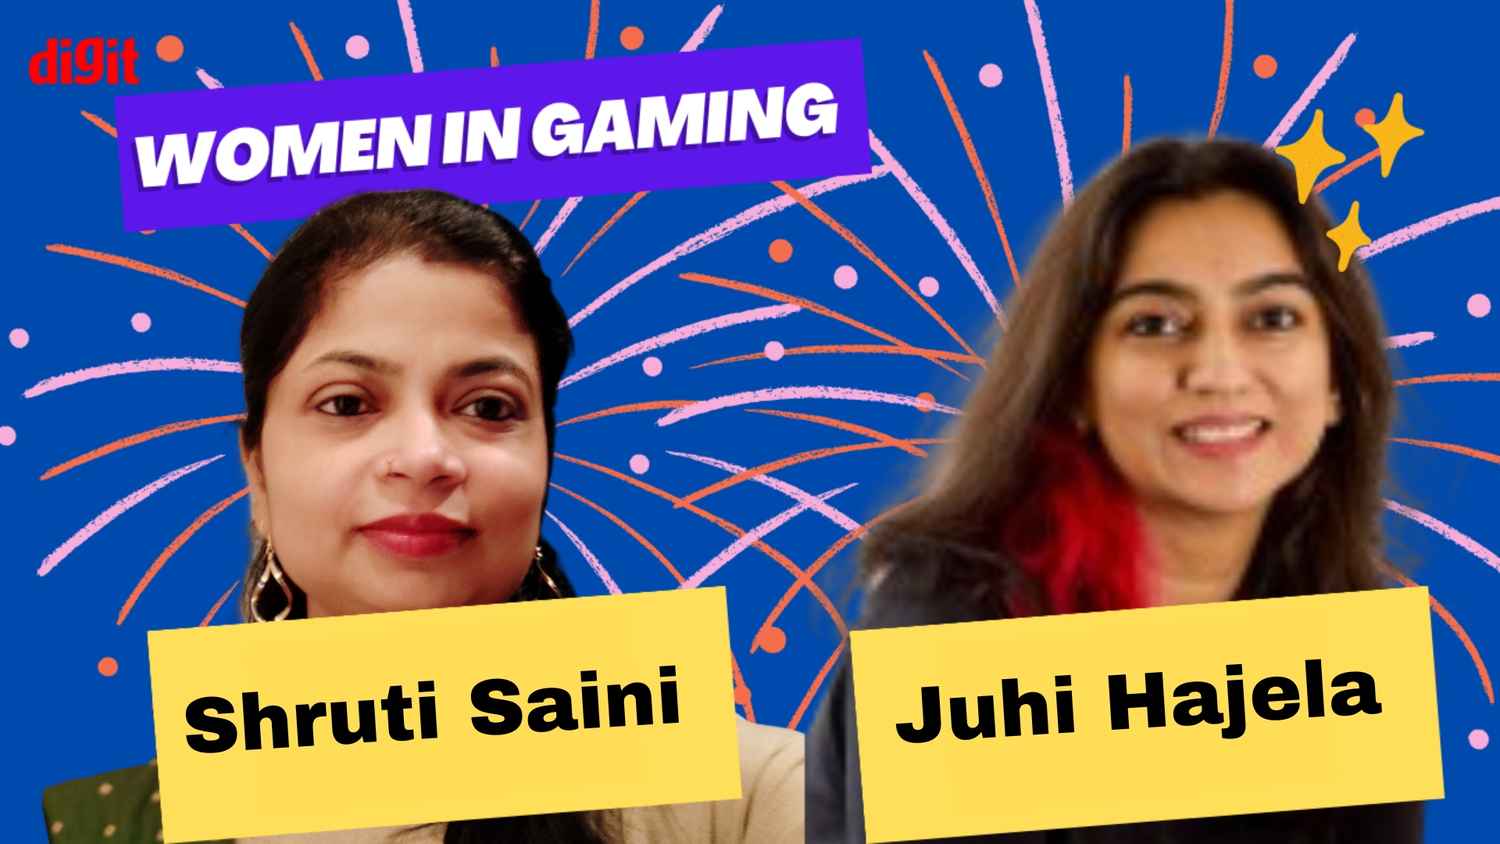 Women’s Day: BlueStacks’ Juhi Hajela and Shruti Saini on Women in Gaming in India